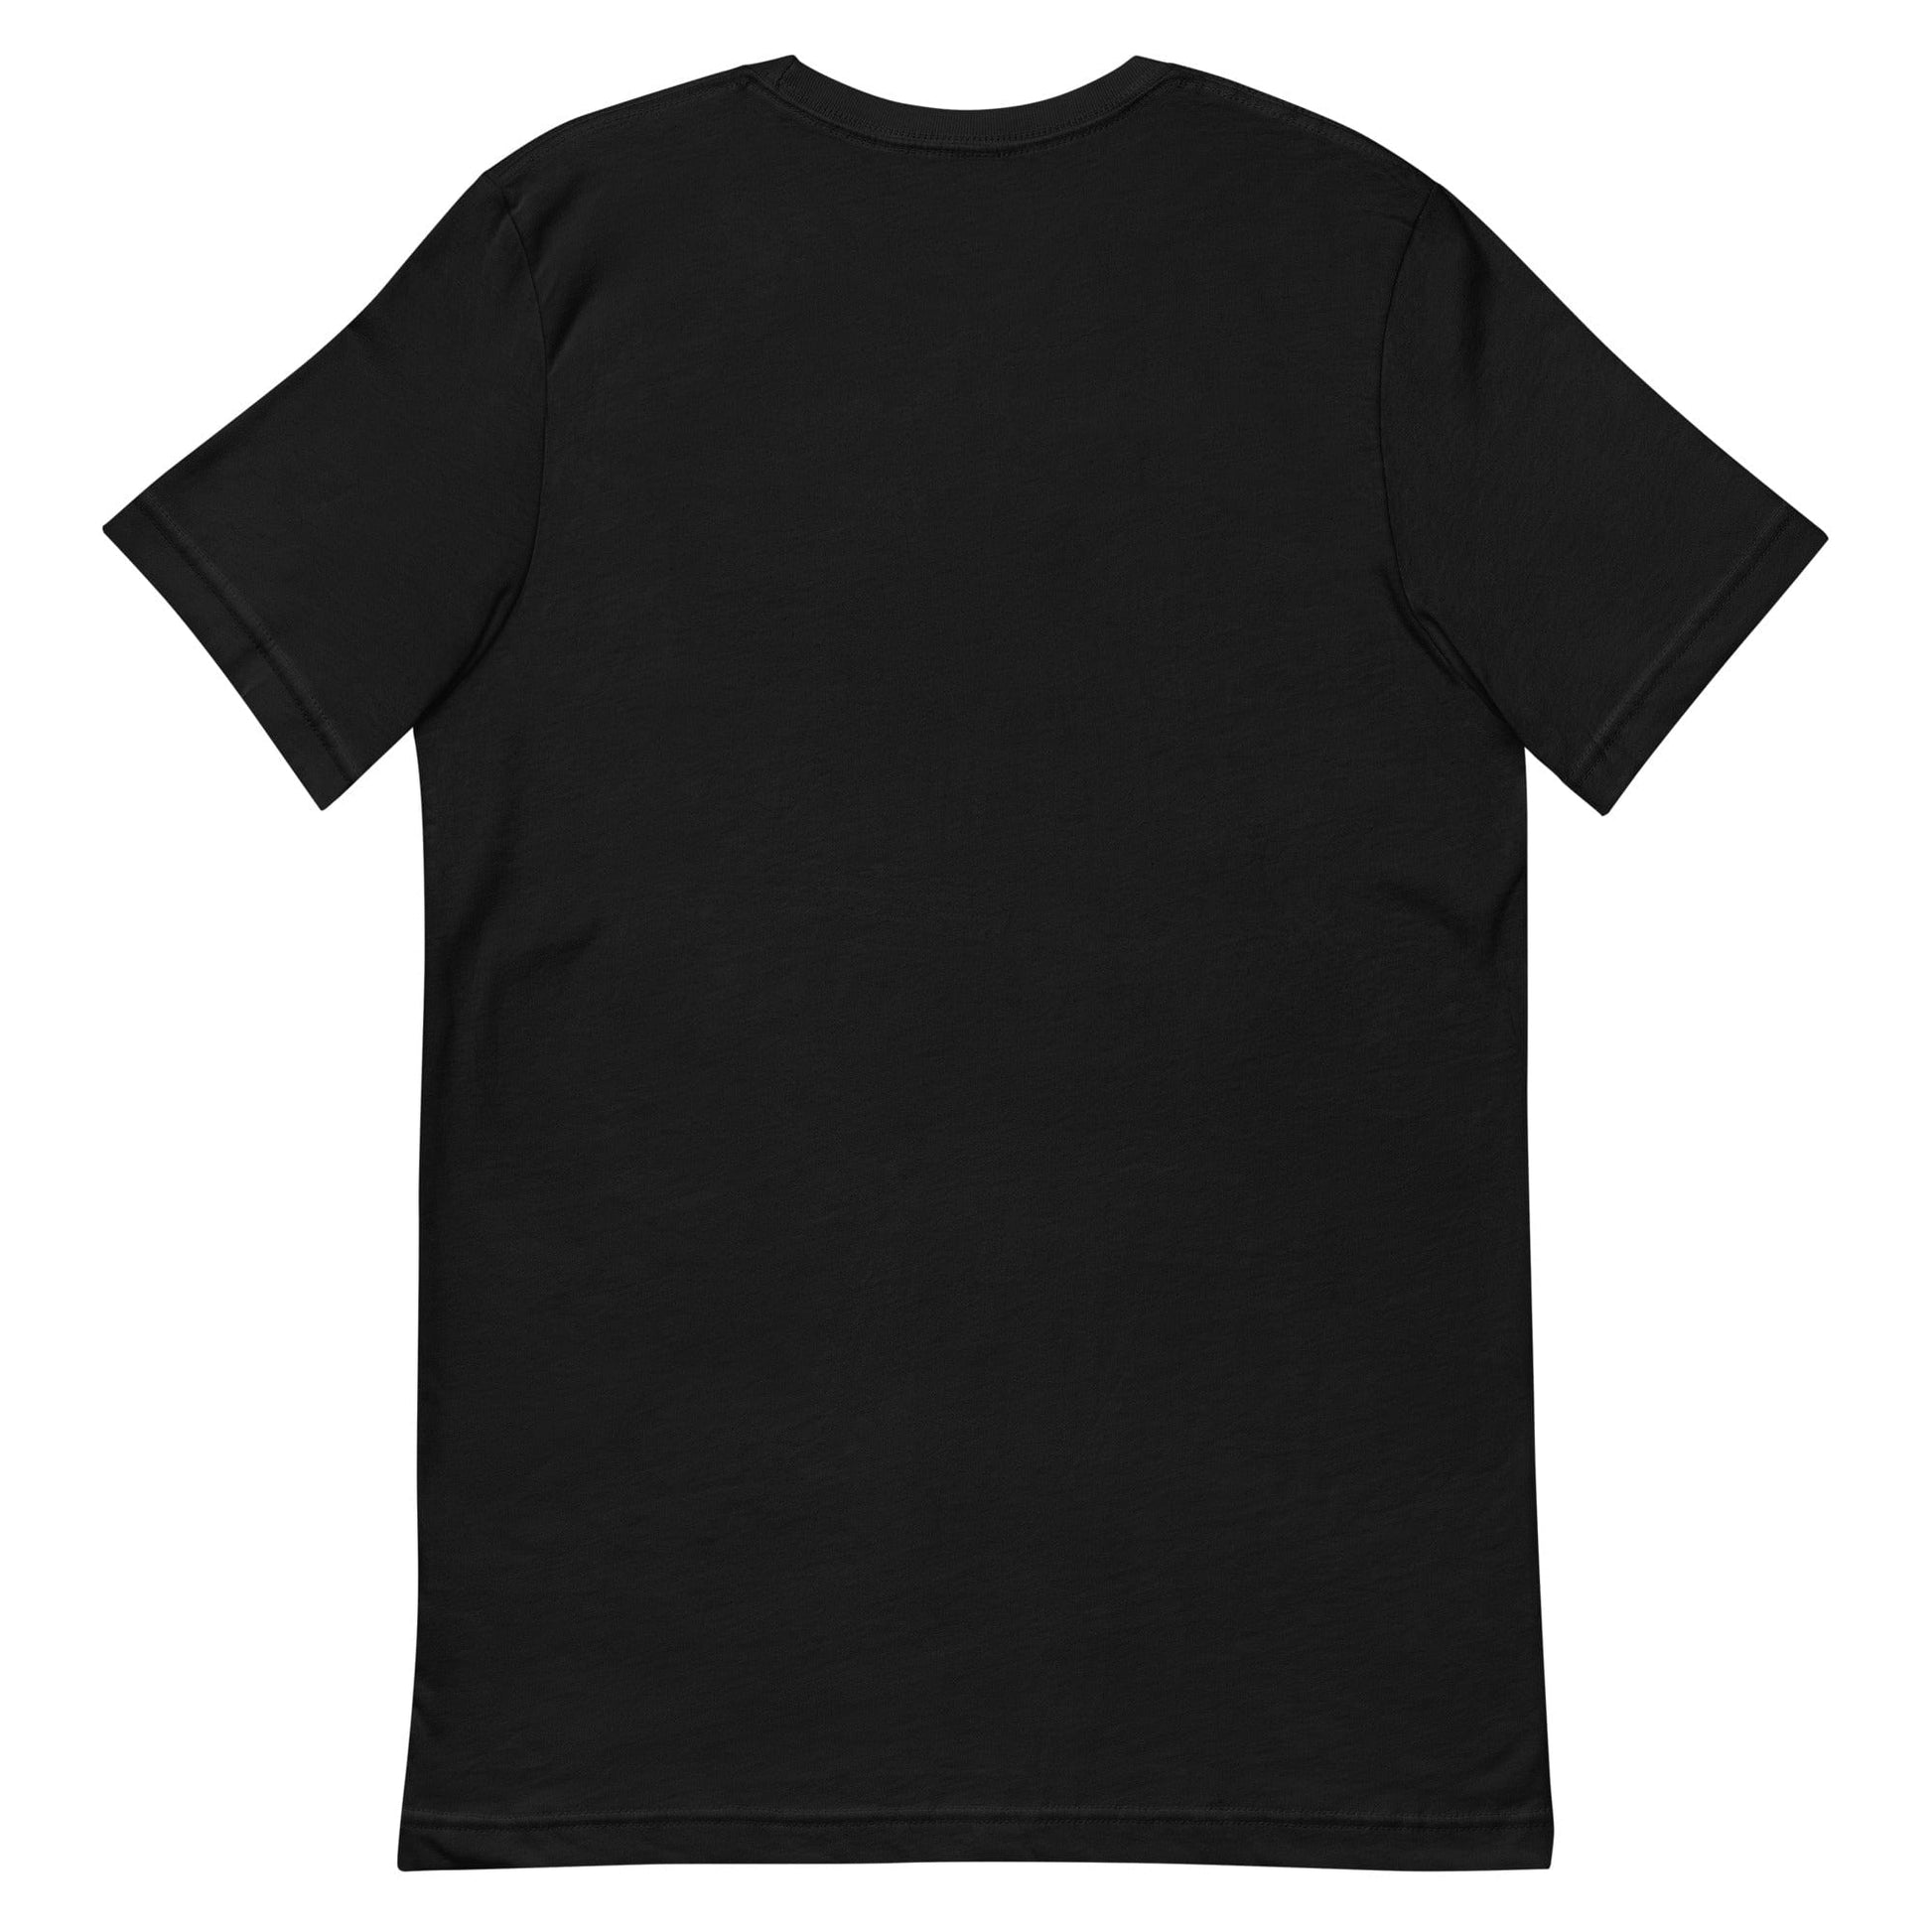 stay-strong-feminist-tshirt-apparel-at-feminist-define-black-back